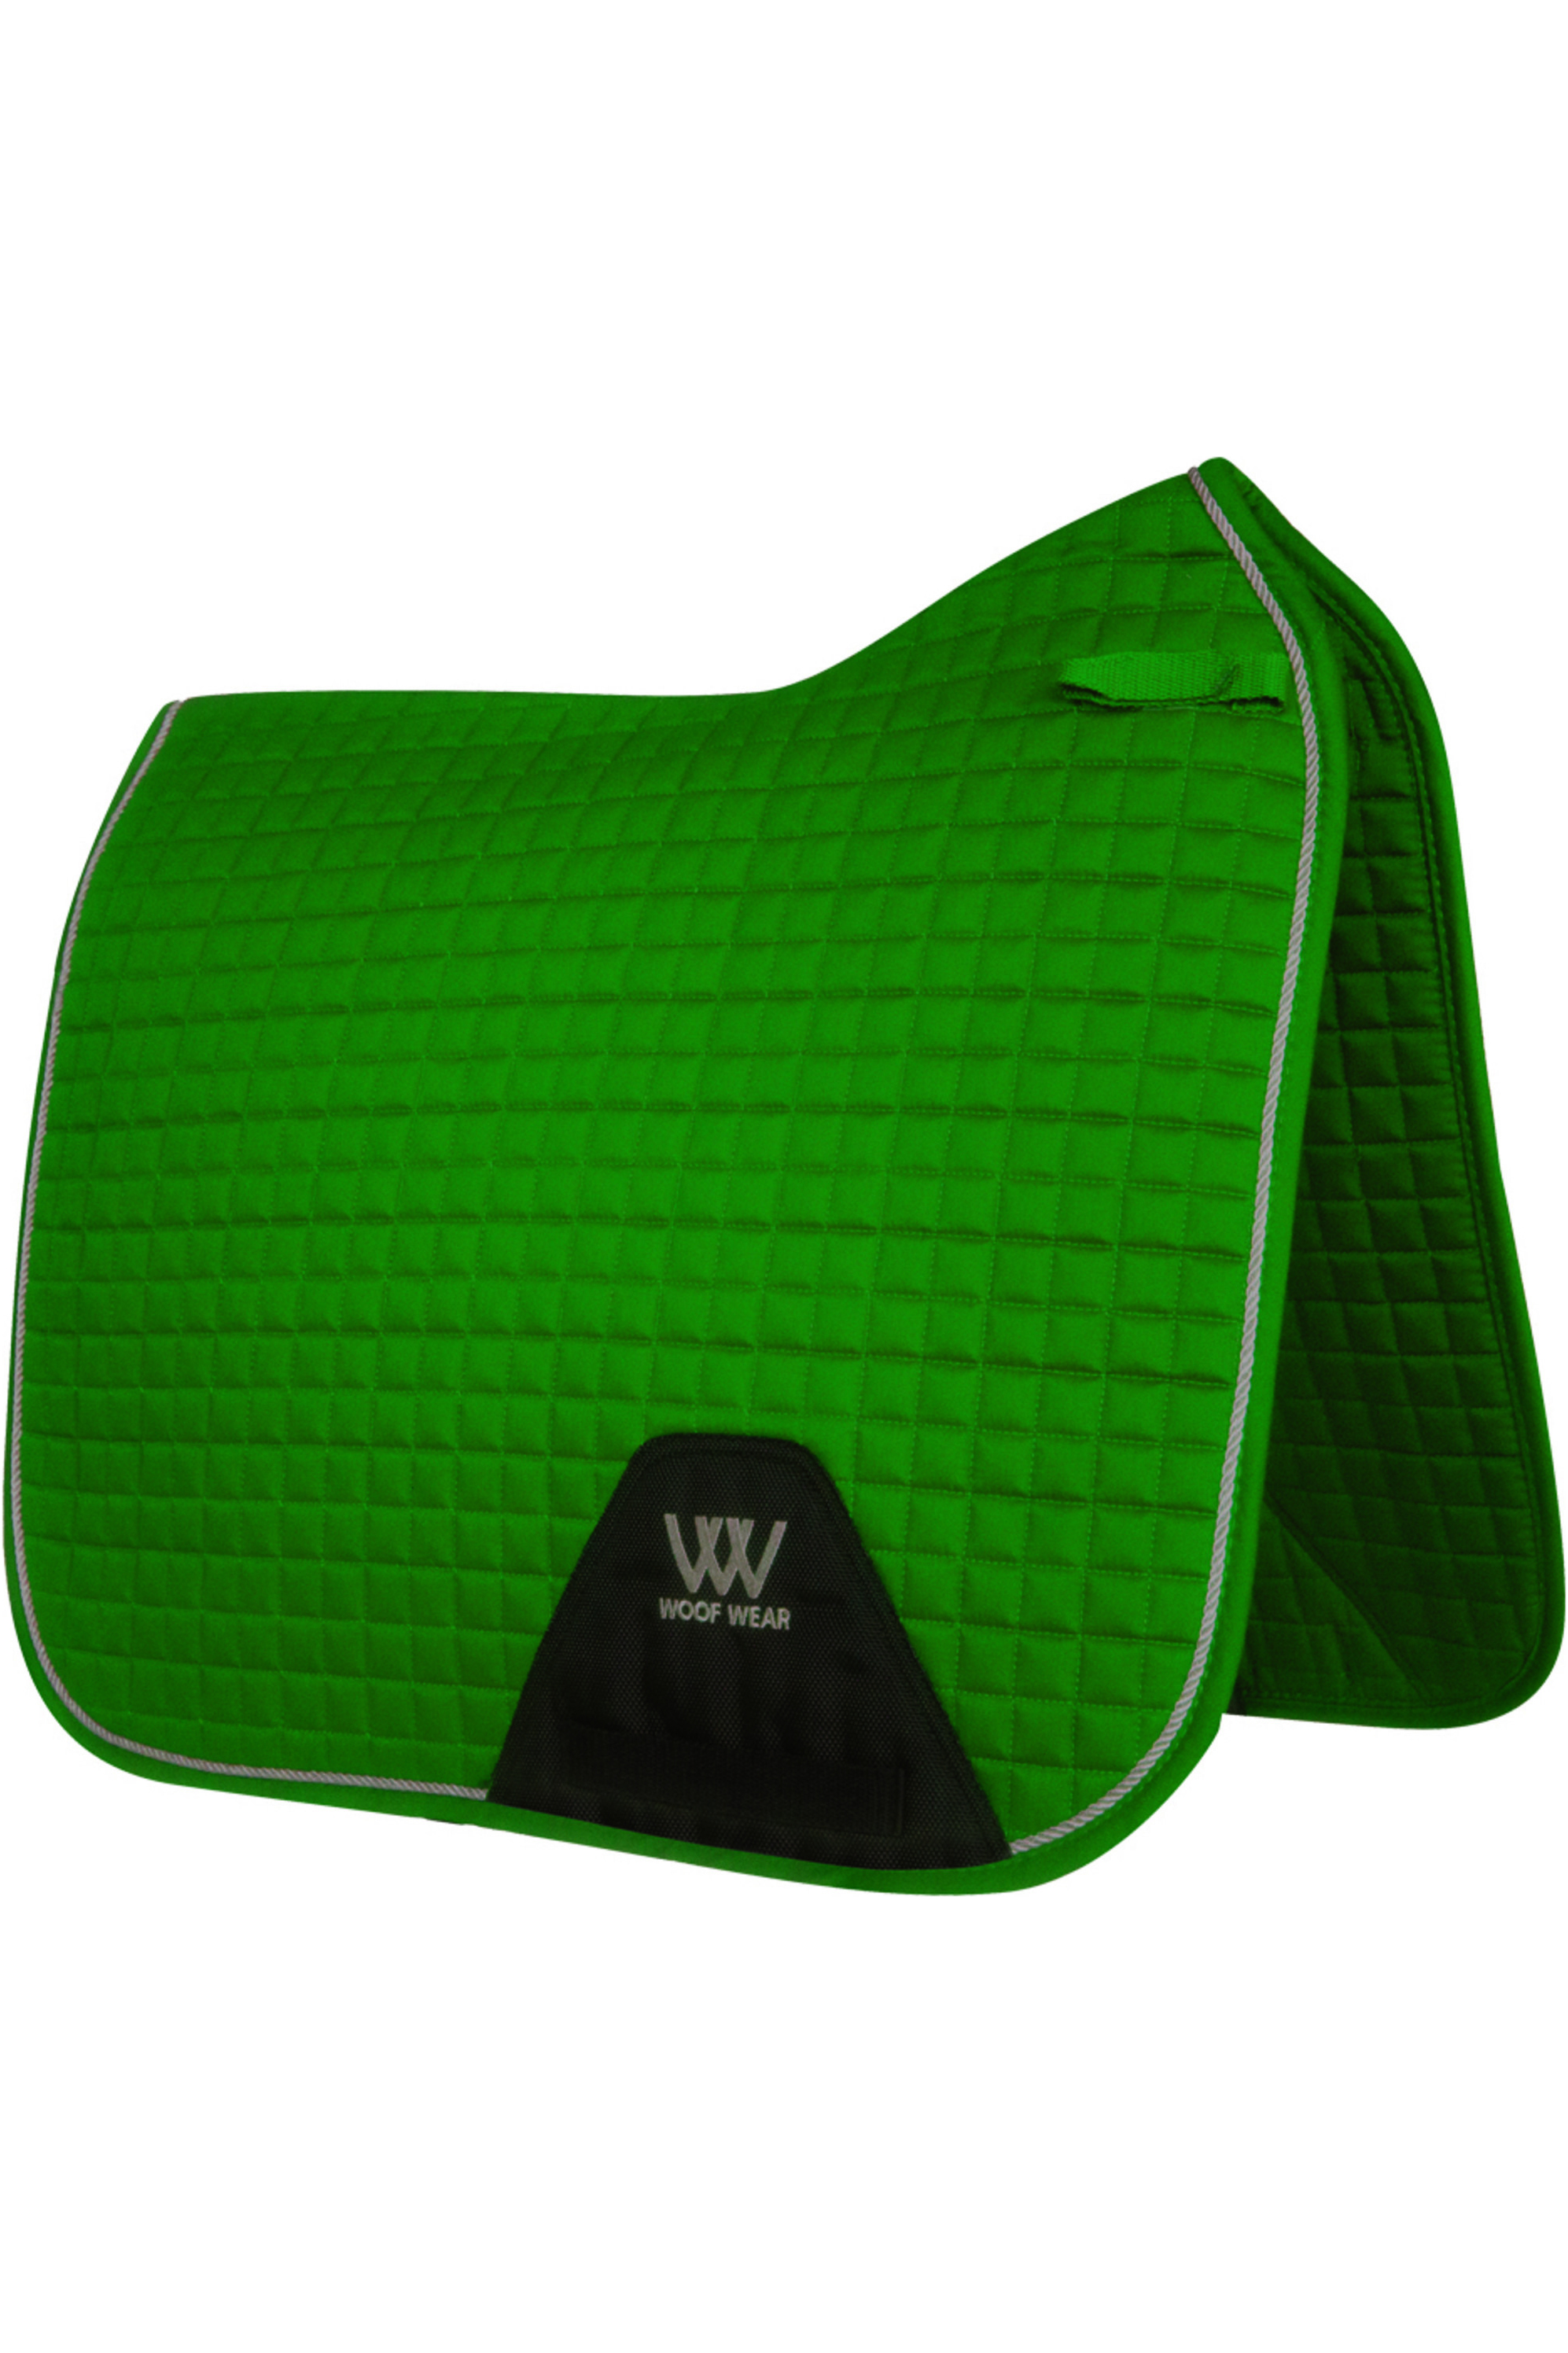 Woof Wear GP Saddle Cloth Racing Green, Full 